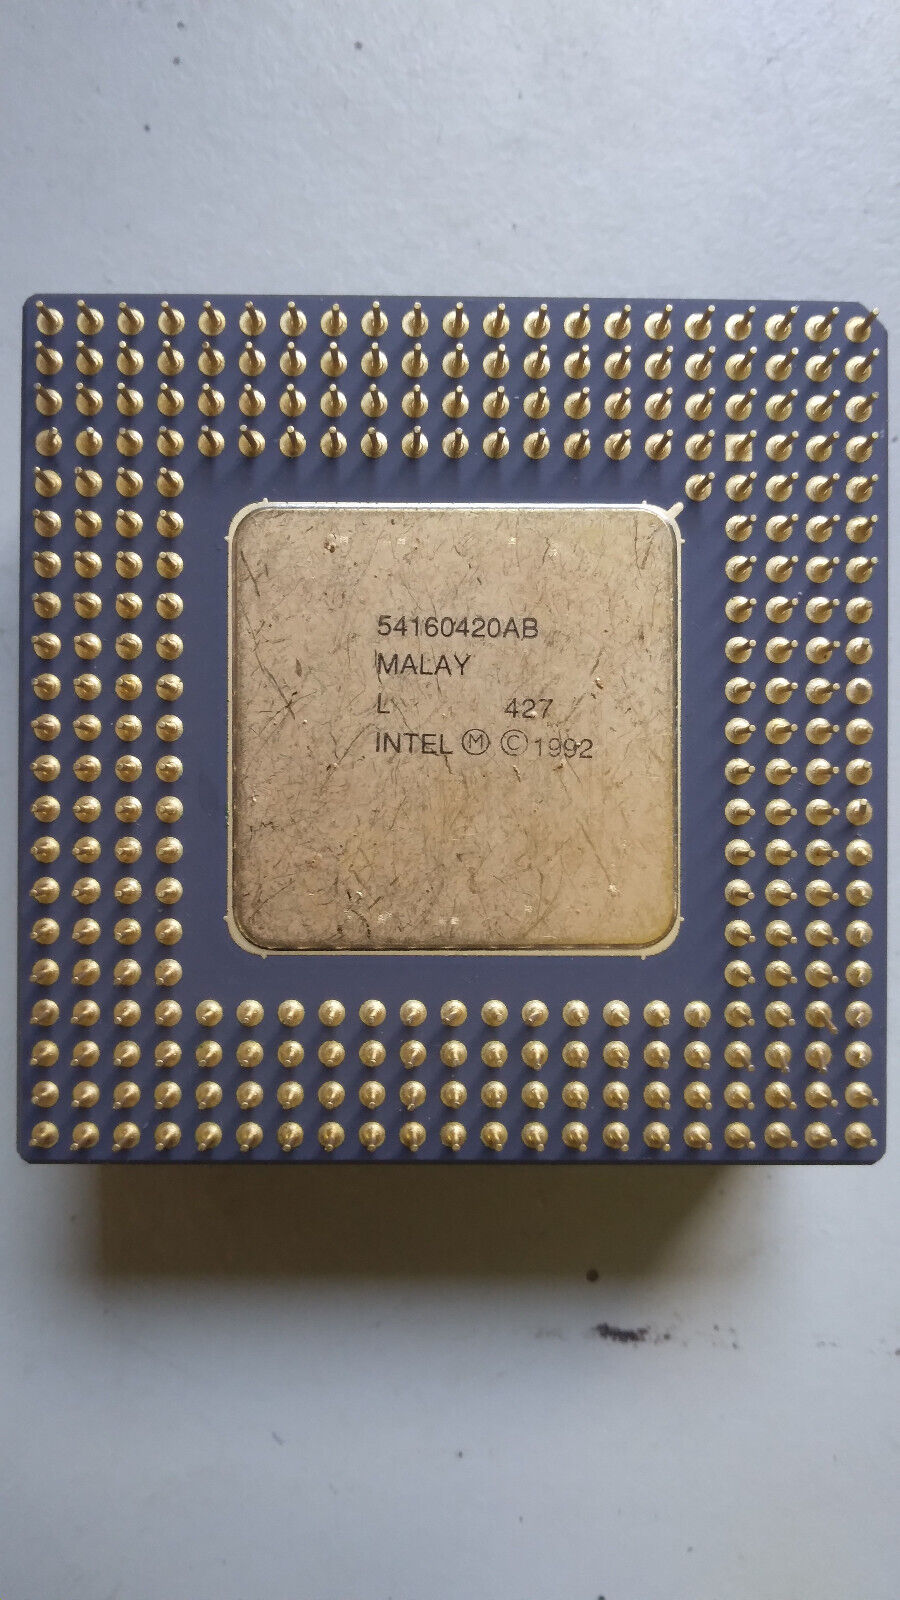 Intel Pentium Processor 60 MHz with heatsink. Rare, Collectable.